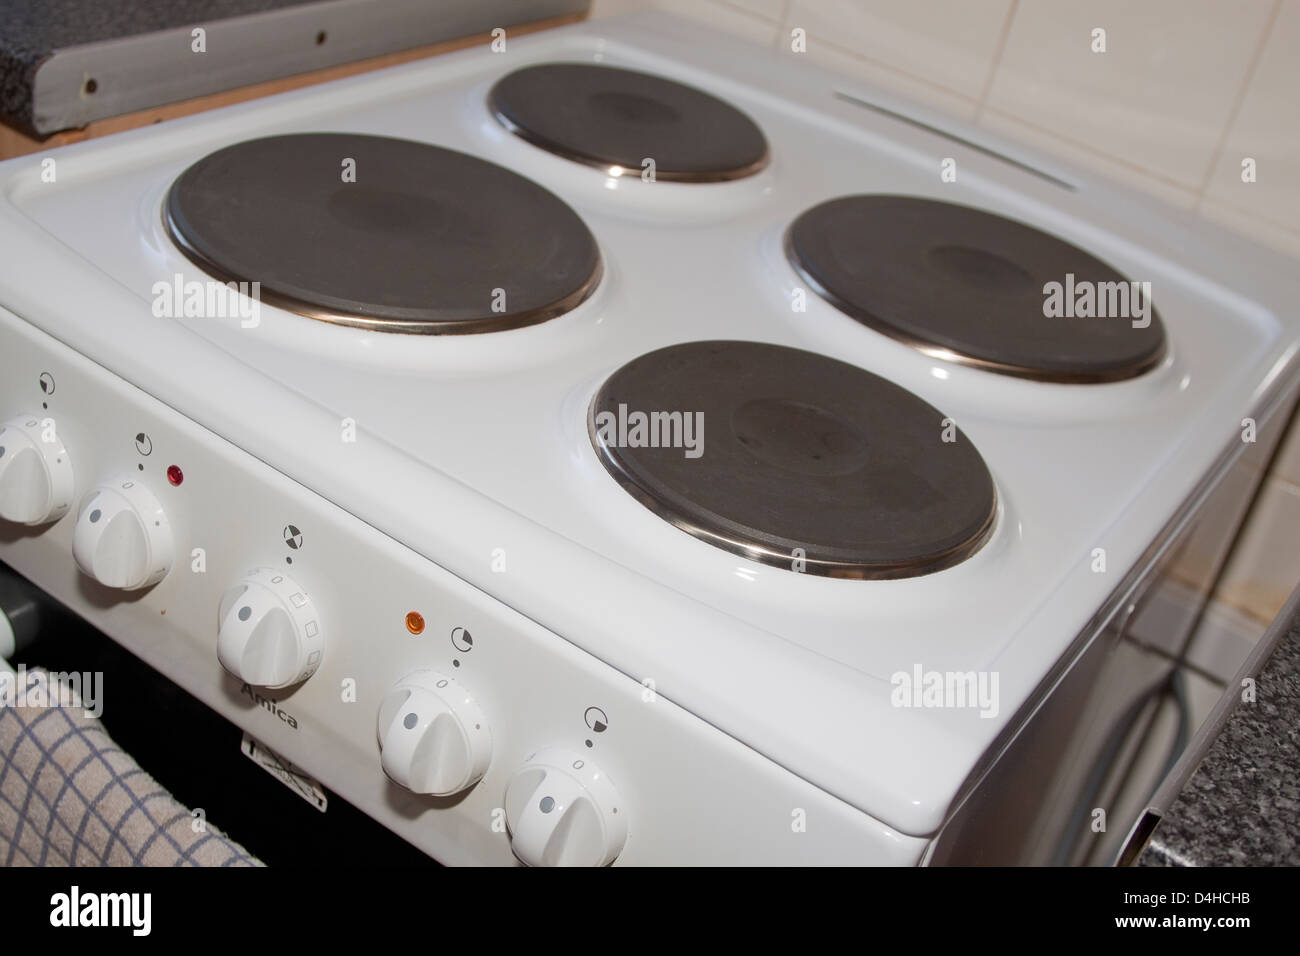 https://c8.alamy.com/comp/D4HCHB/freestanding-electric-cooker-hob-D4HCHB.jpg